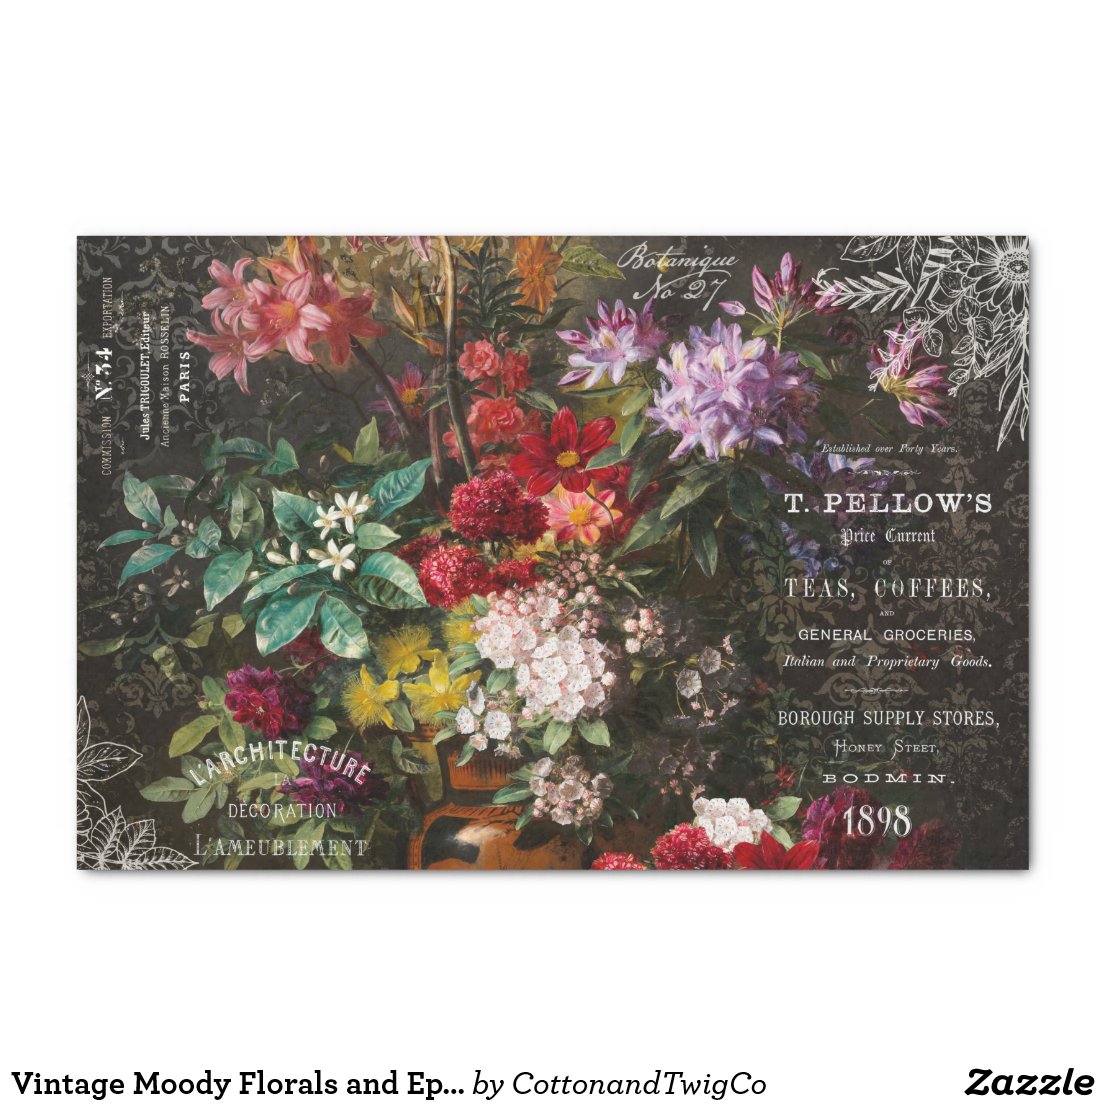 Zazzle - Vintage Moody Florals and Ephemera Decoupage Tissue Paper